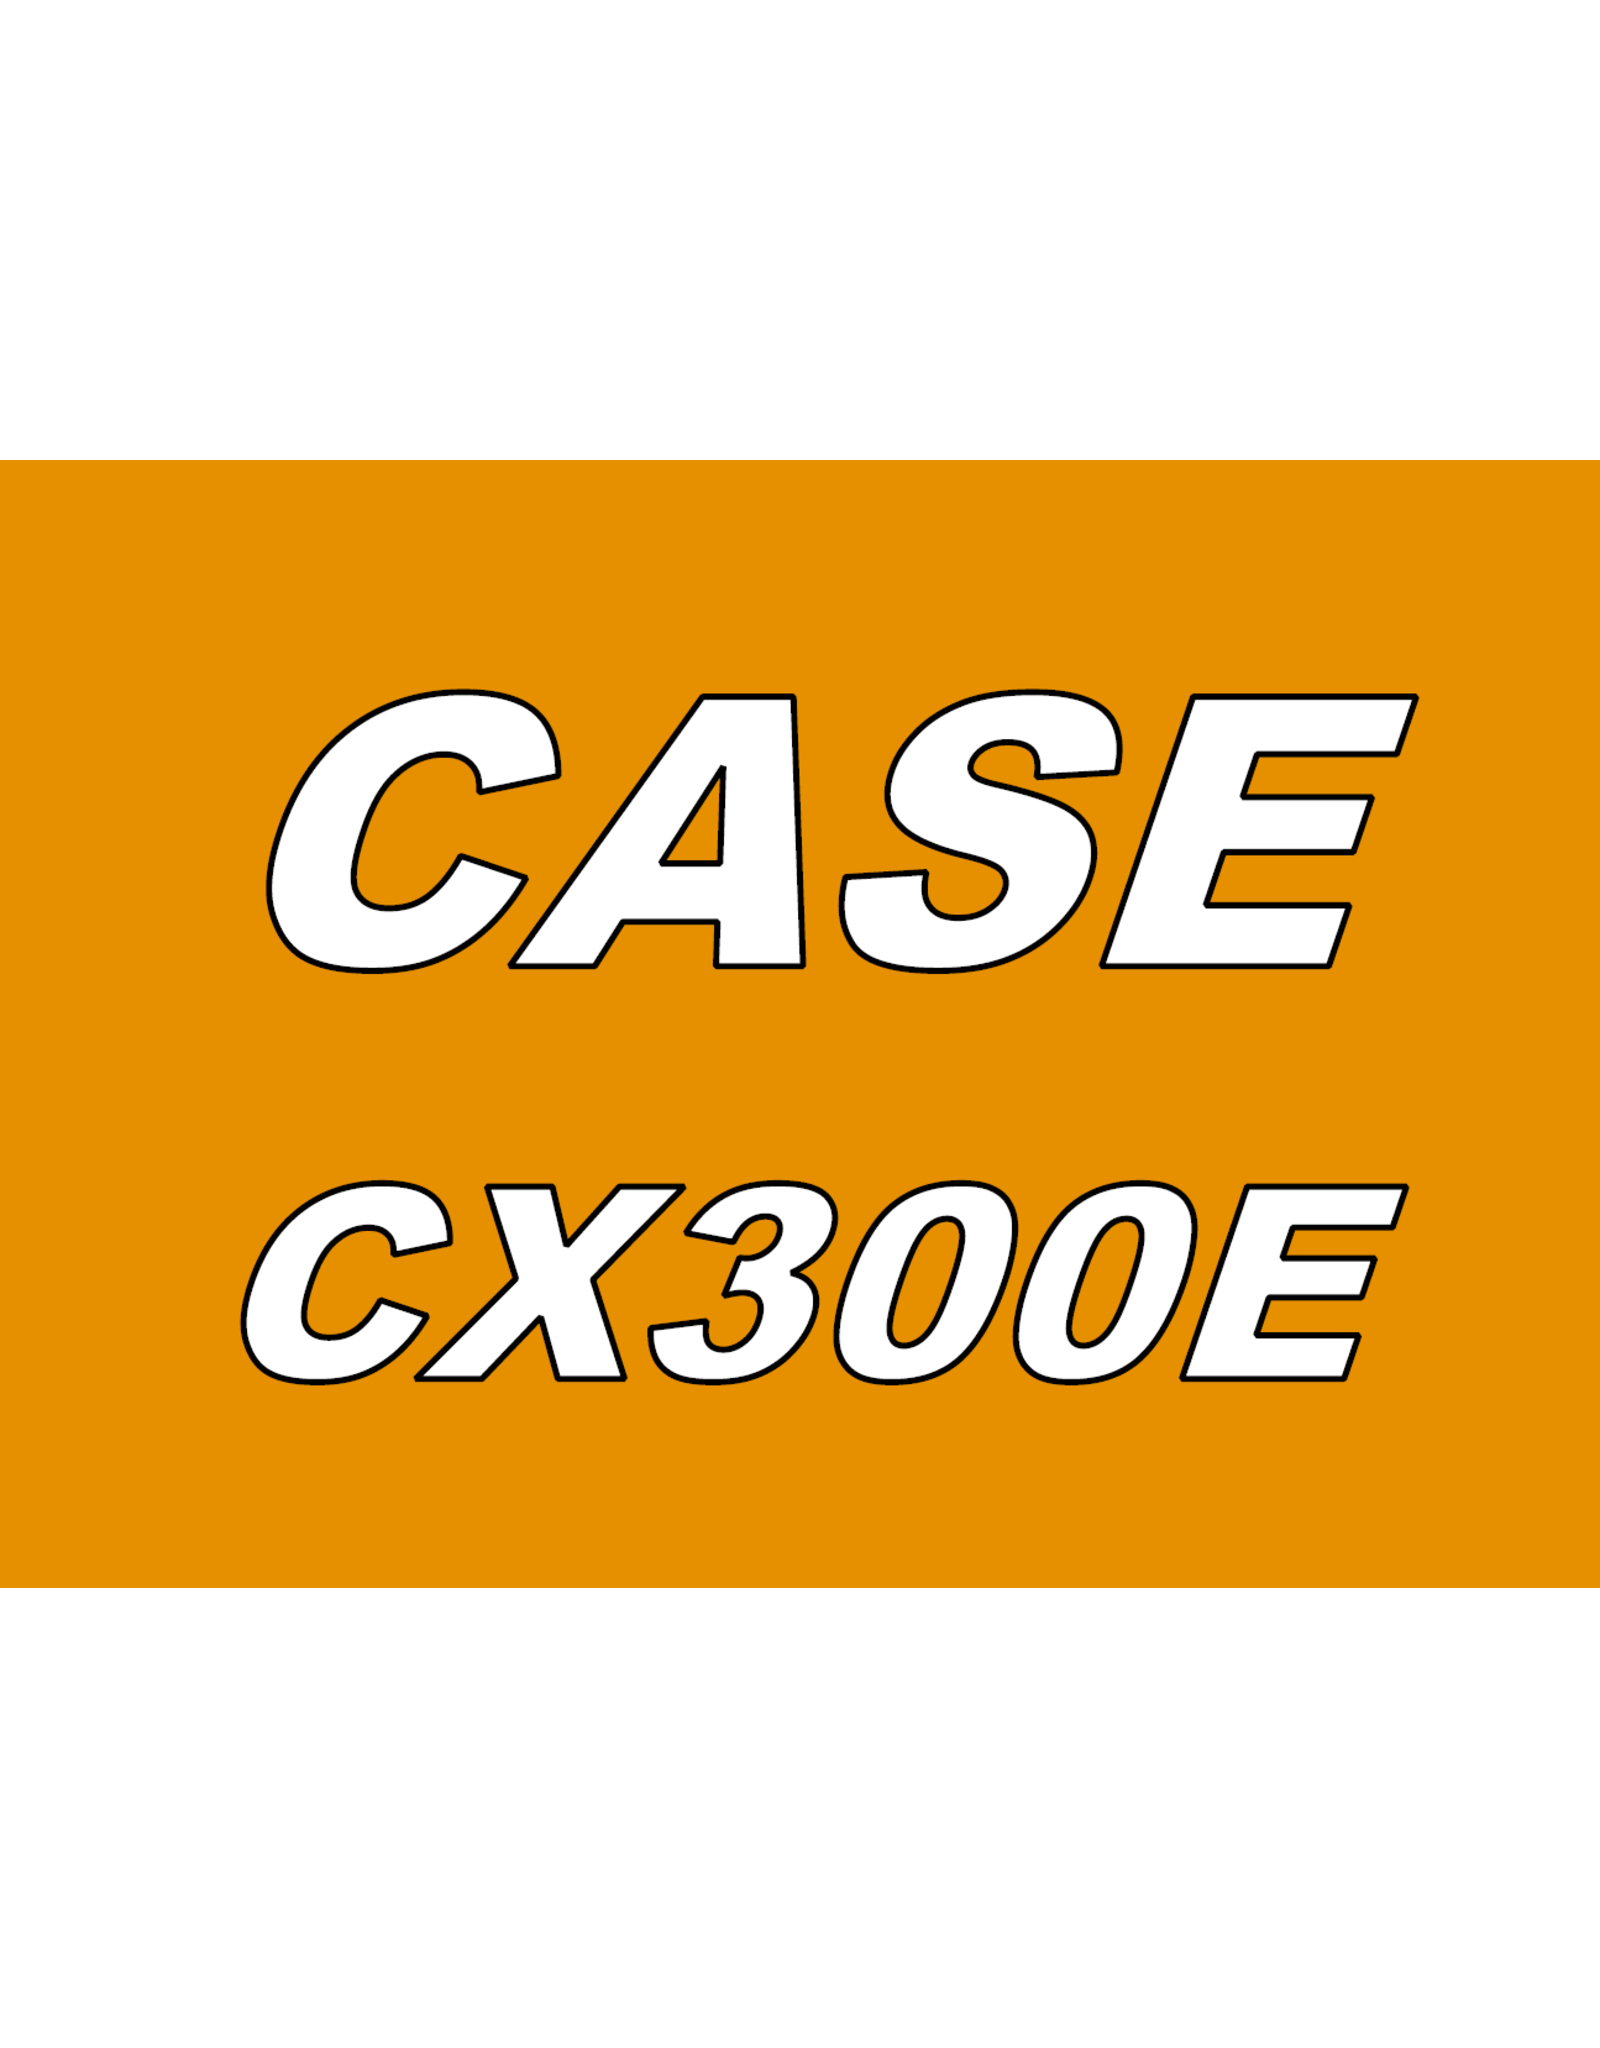 Echle Hartstahl GmbH Excavator Chain Scraper CASE CX300E